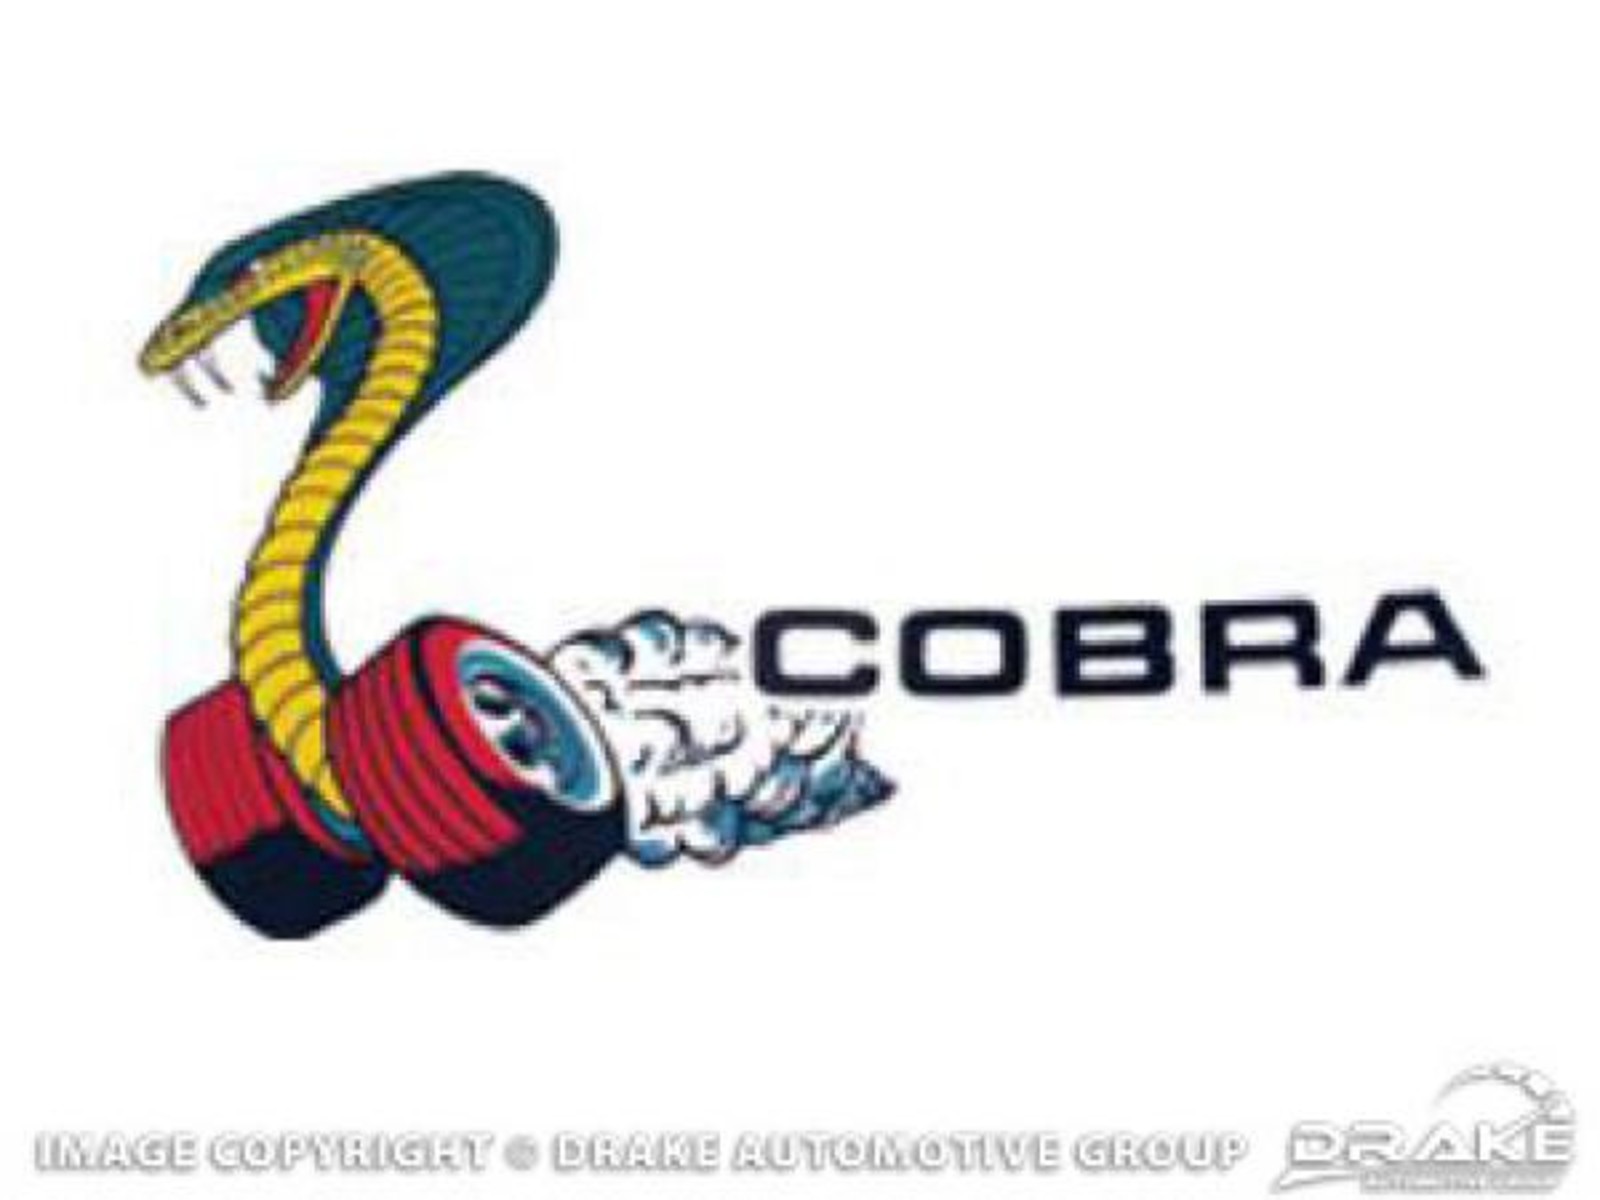 64-21 Cobra Window Decal